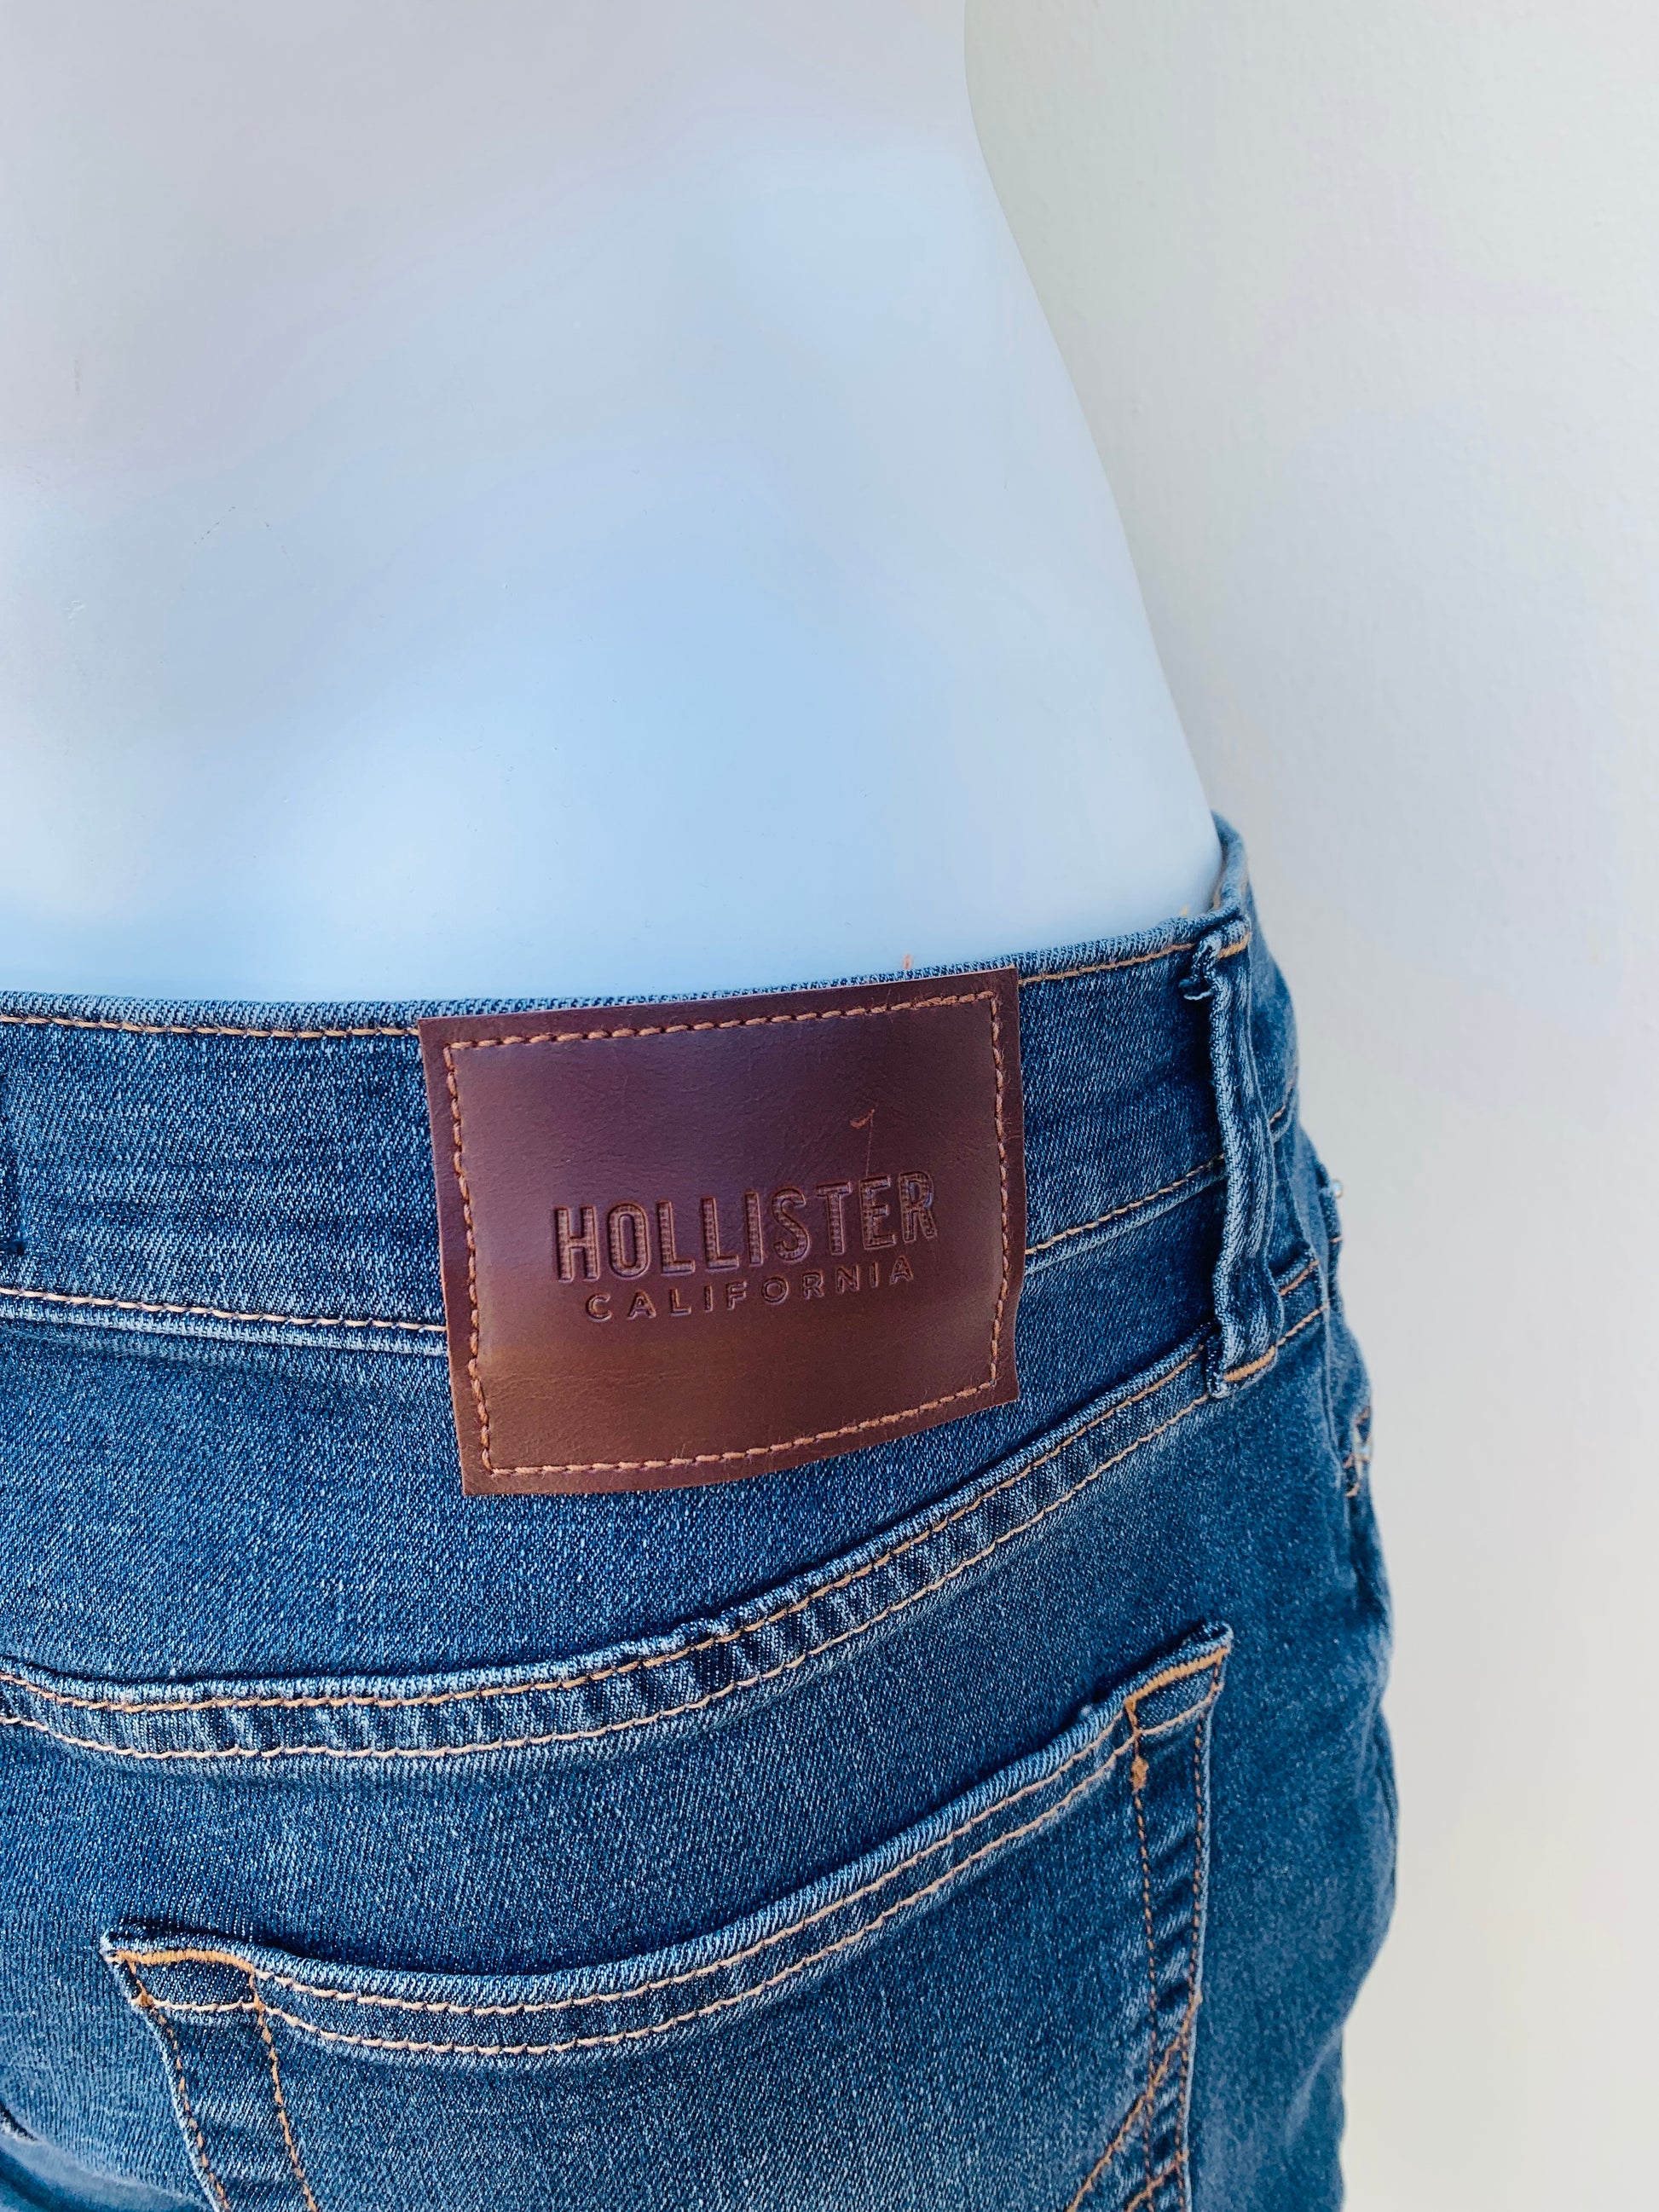 Pantalón Jeans Hollister original azul marino oscuro liso, STACKED SKI